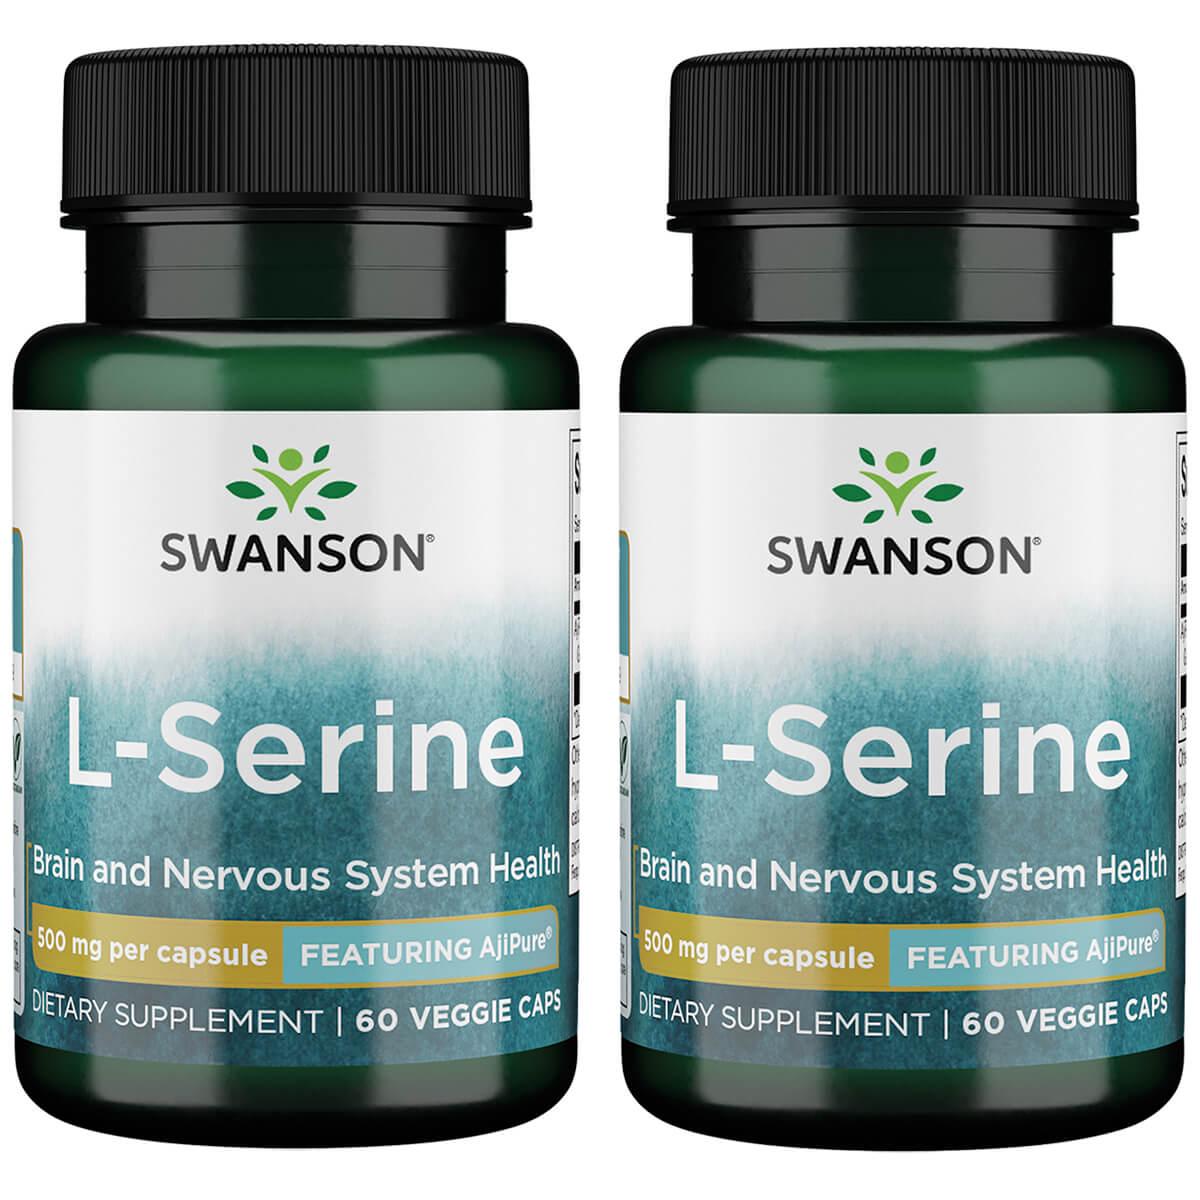 Swanson Ultra L-Serine - Featuring Ajipure 2 Pack Vitamin 500 mg 60 Veg Caps